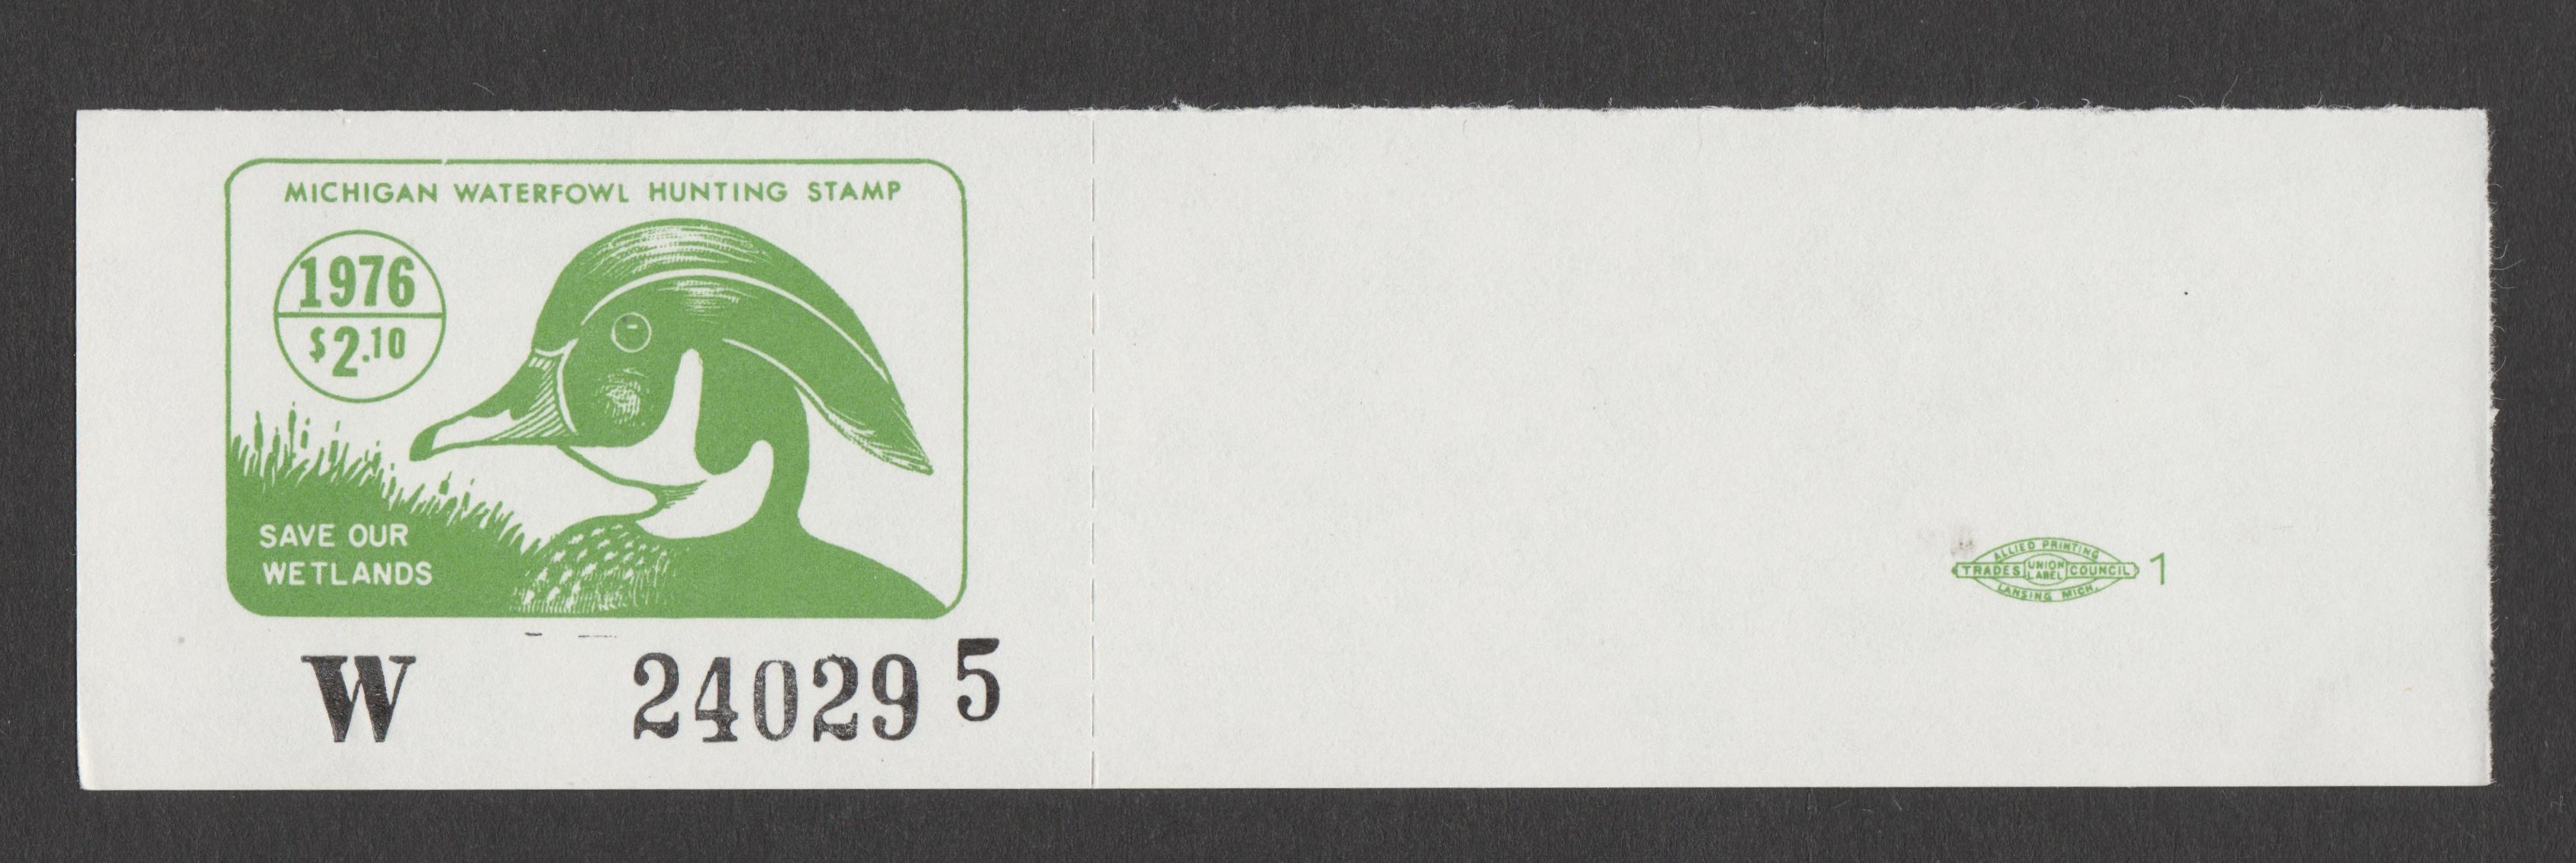 MI waterfowl W1 $2.10 MNH VF, 1976 w/selvage showing union label P